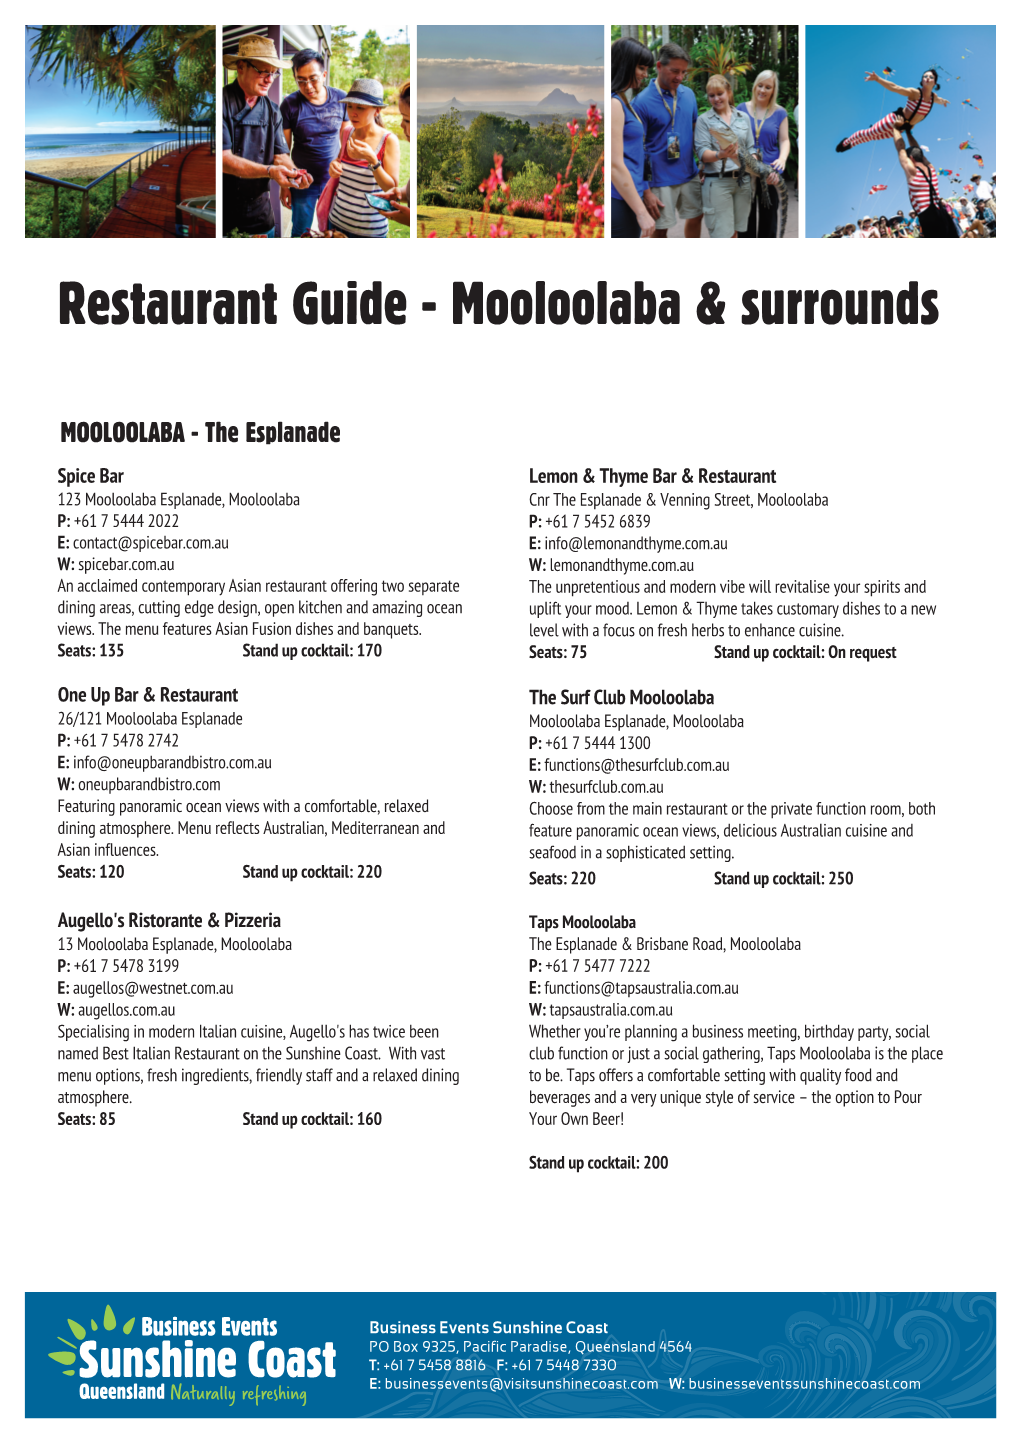 Restaurant Guide - Mooloolaba & Surrounds